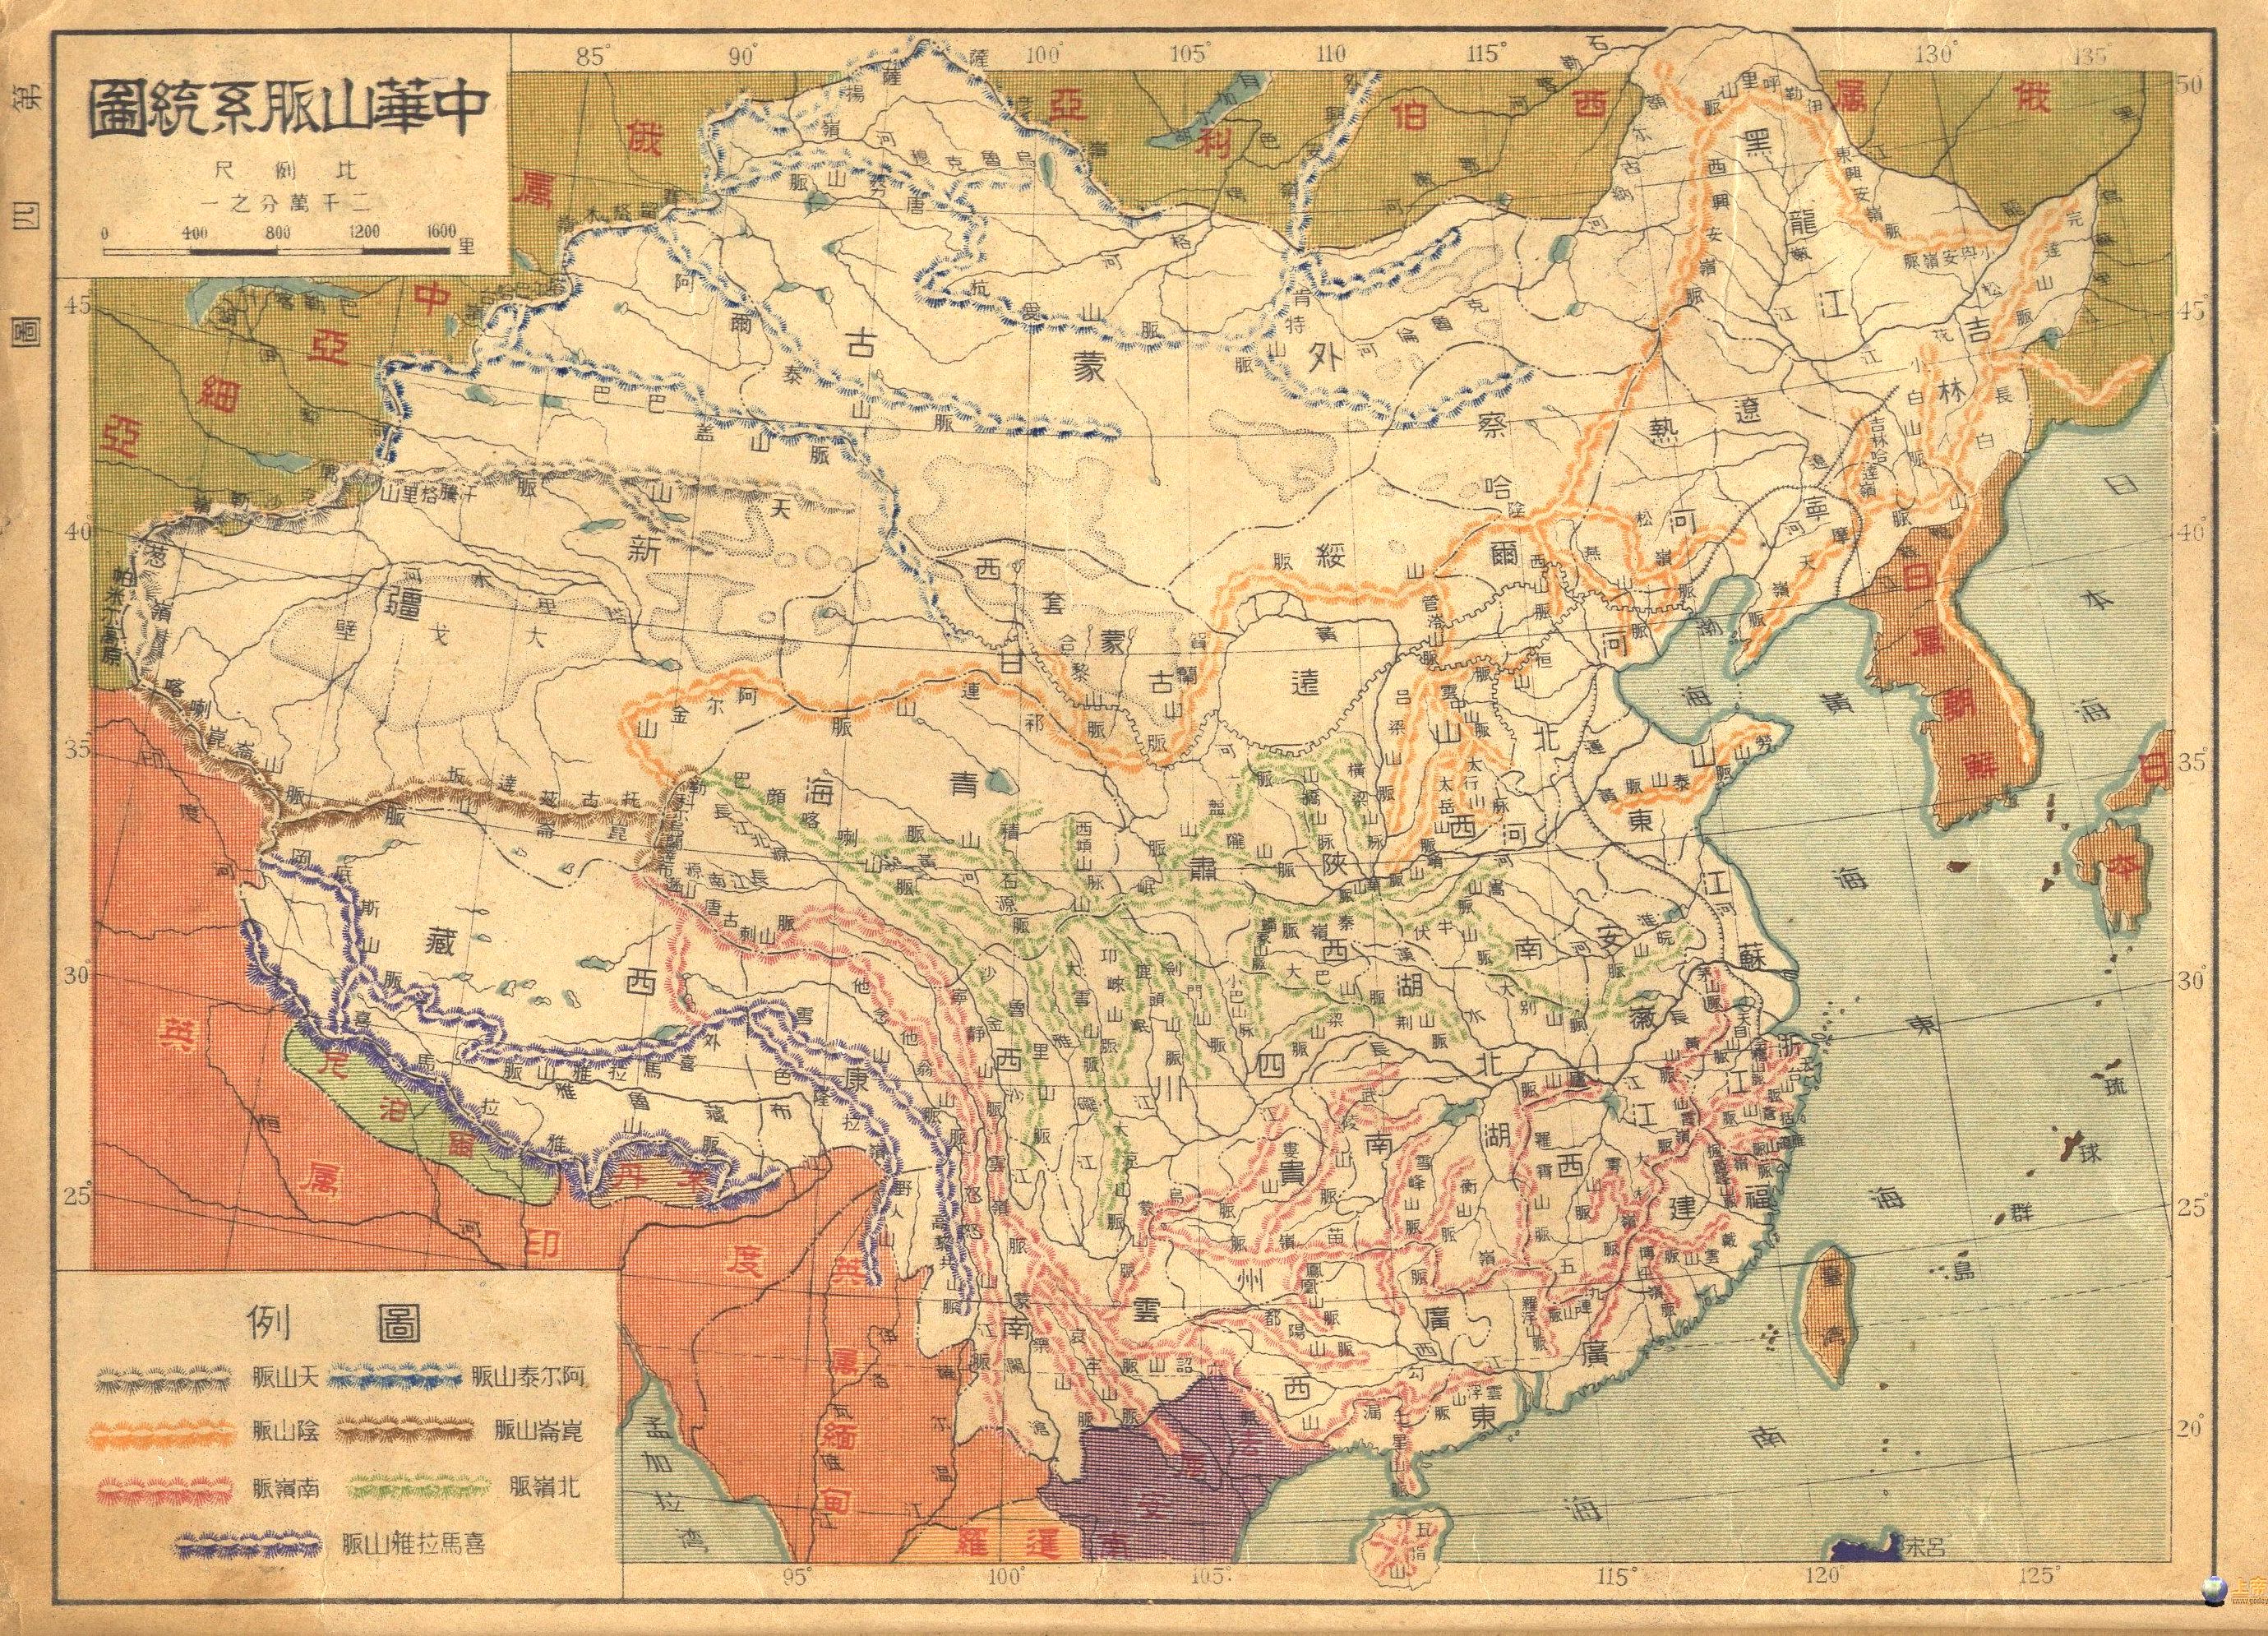 Photo of Zhonghua shanmai xitong tu 圖統系脈山華中 or 中华山脉系统图, Map of China's Mountain Ranges